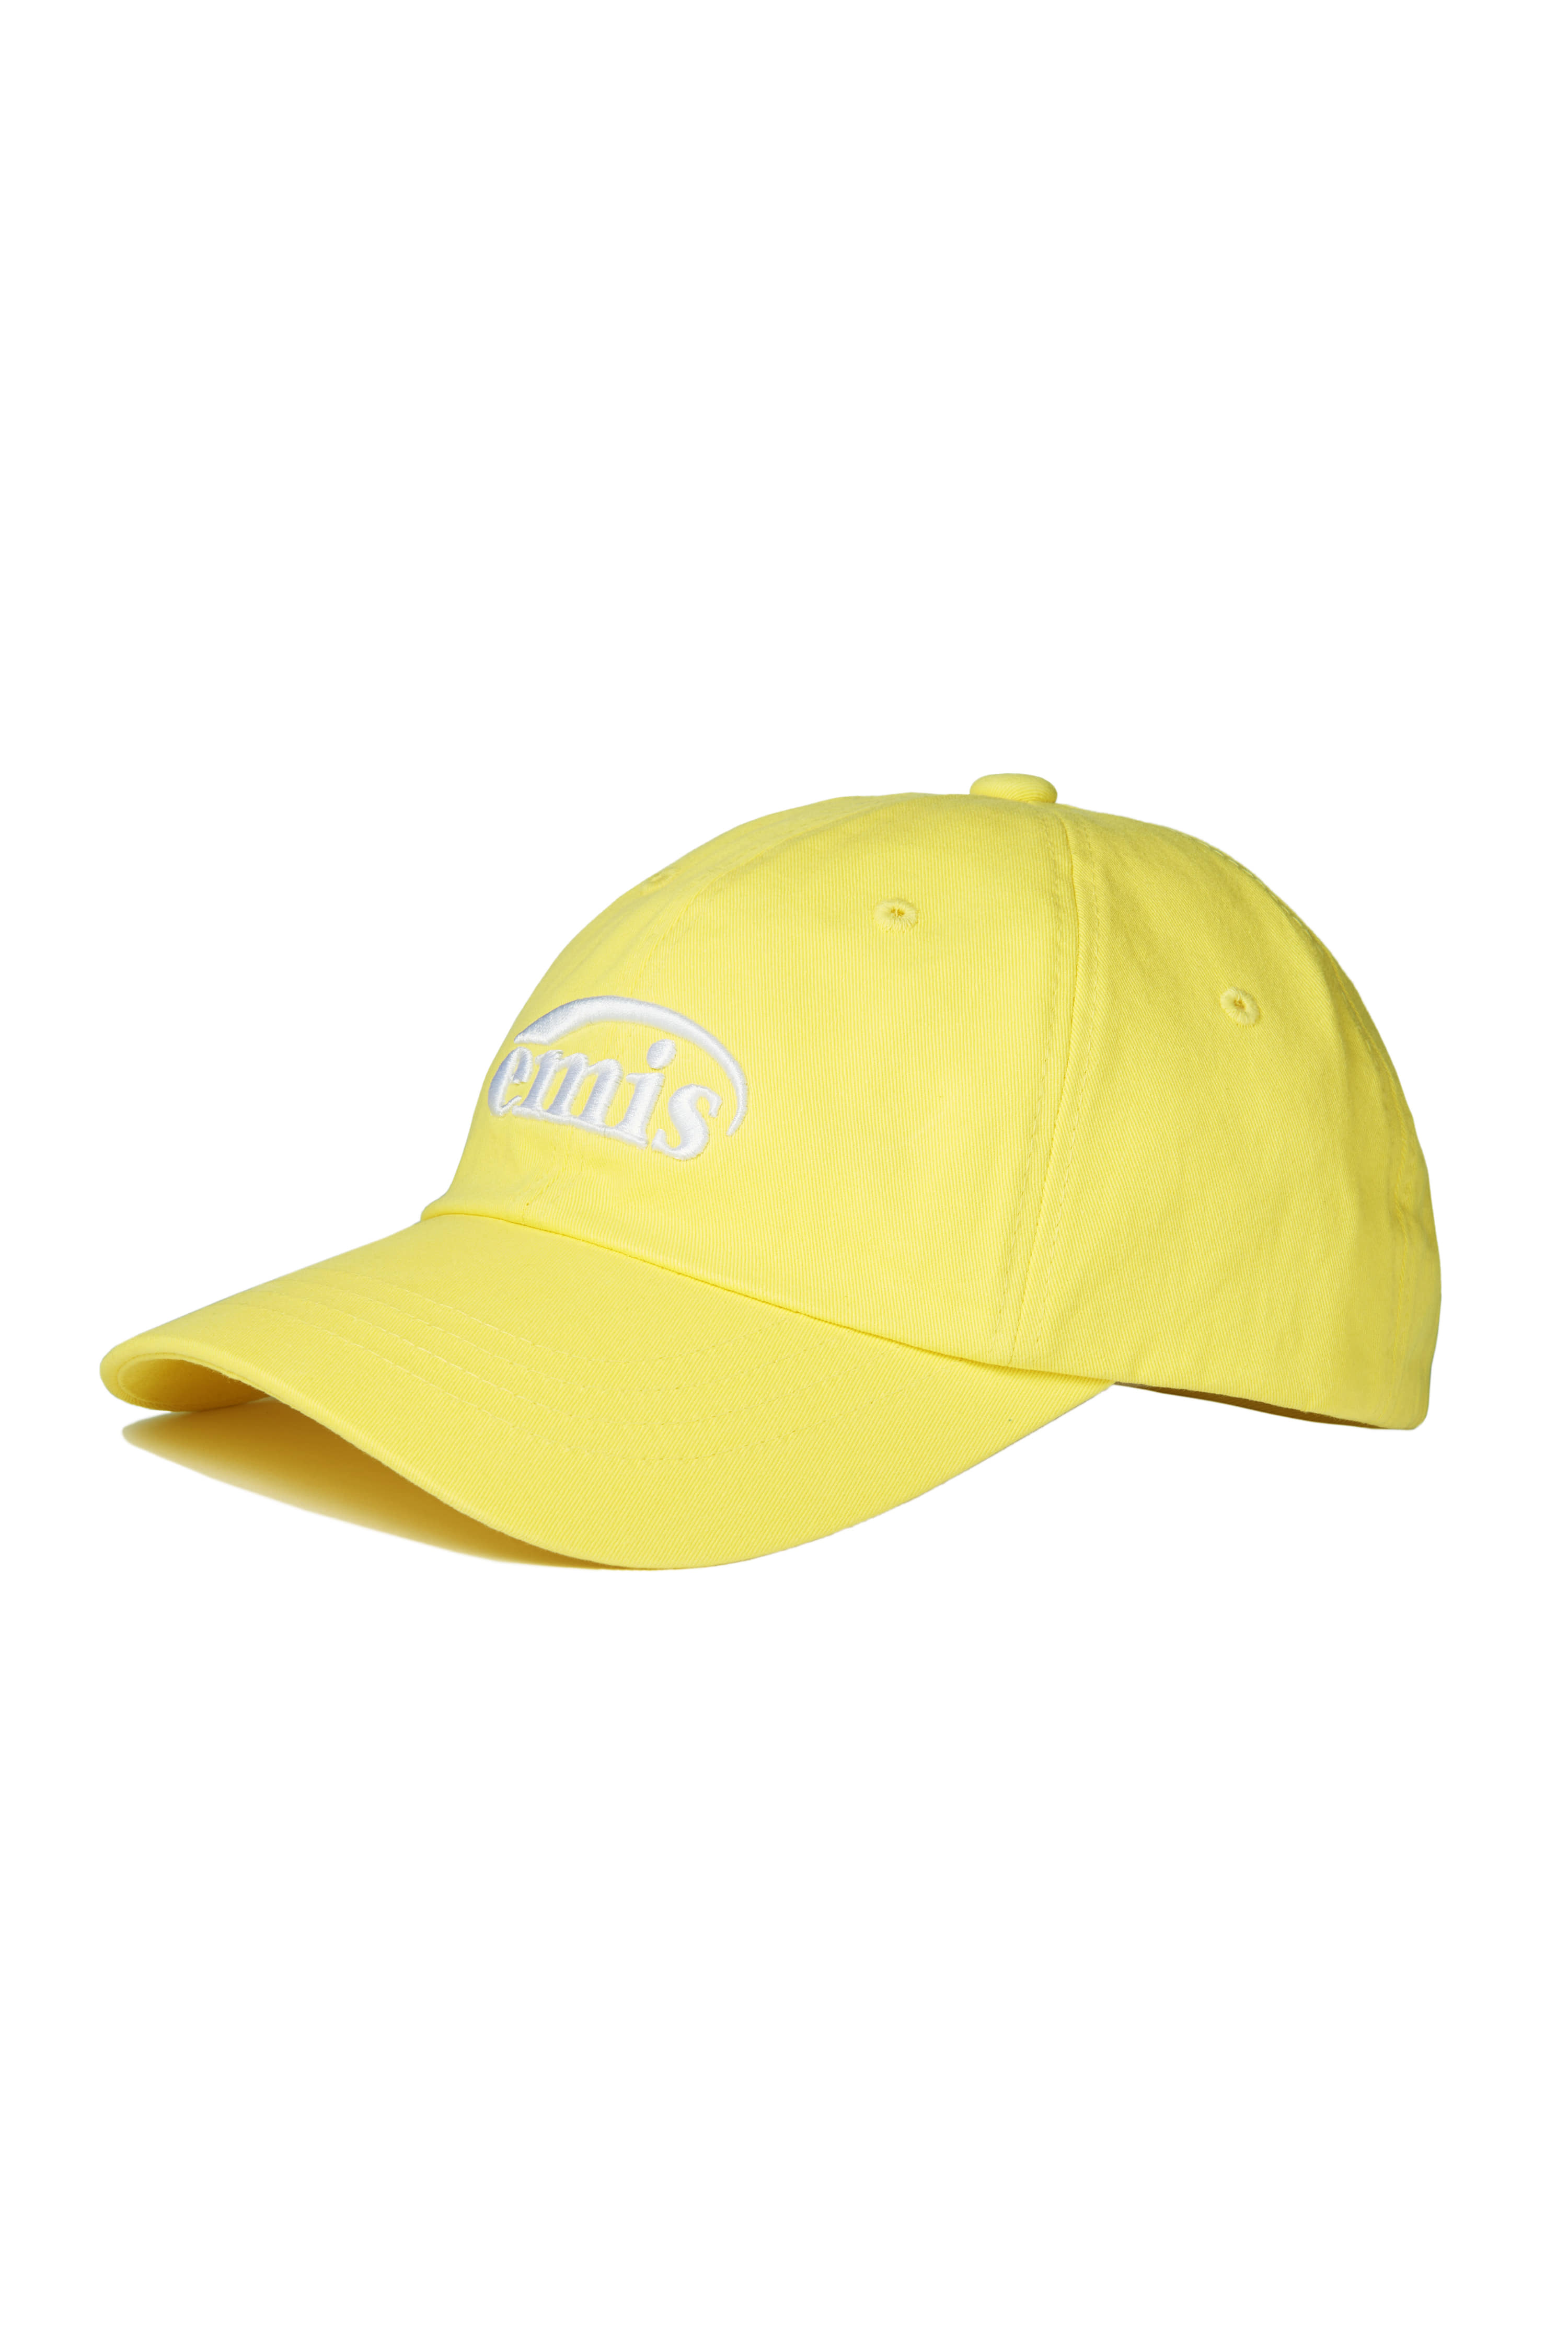 NEW LOGO BALL CAP-YELLOW